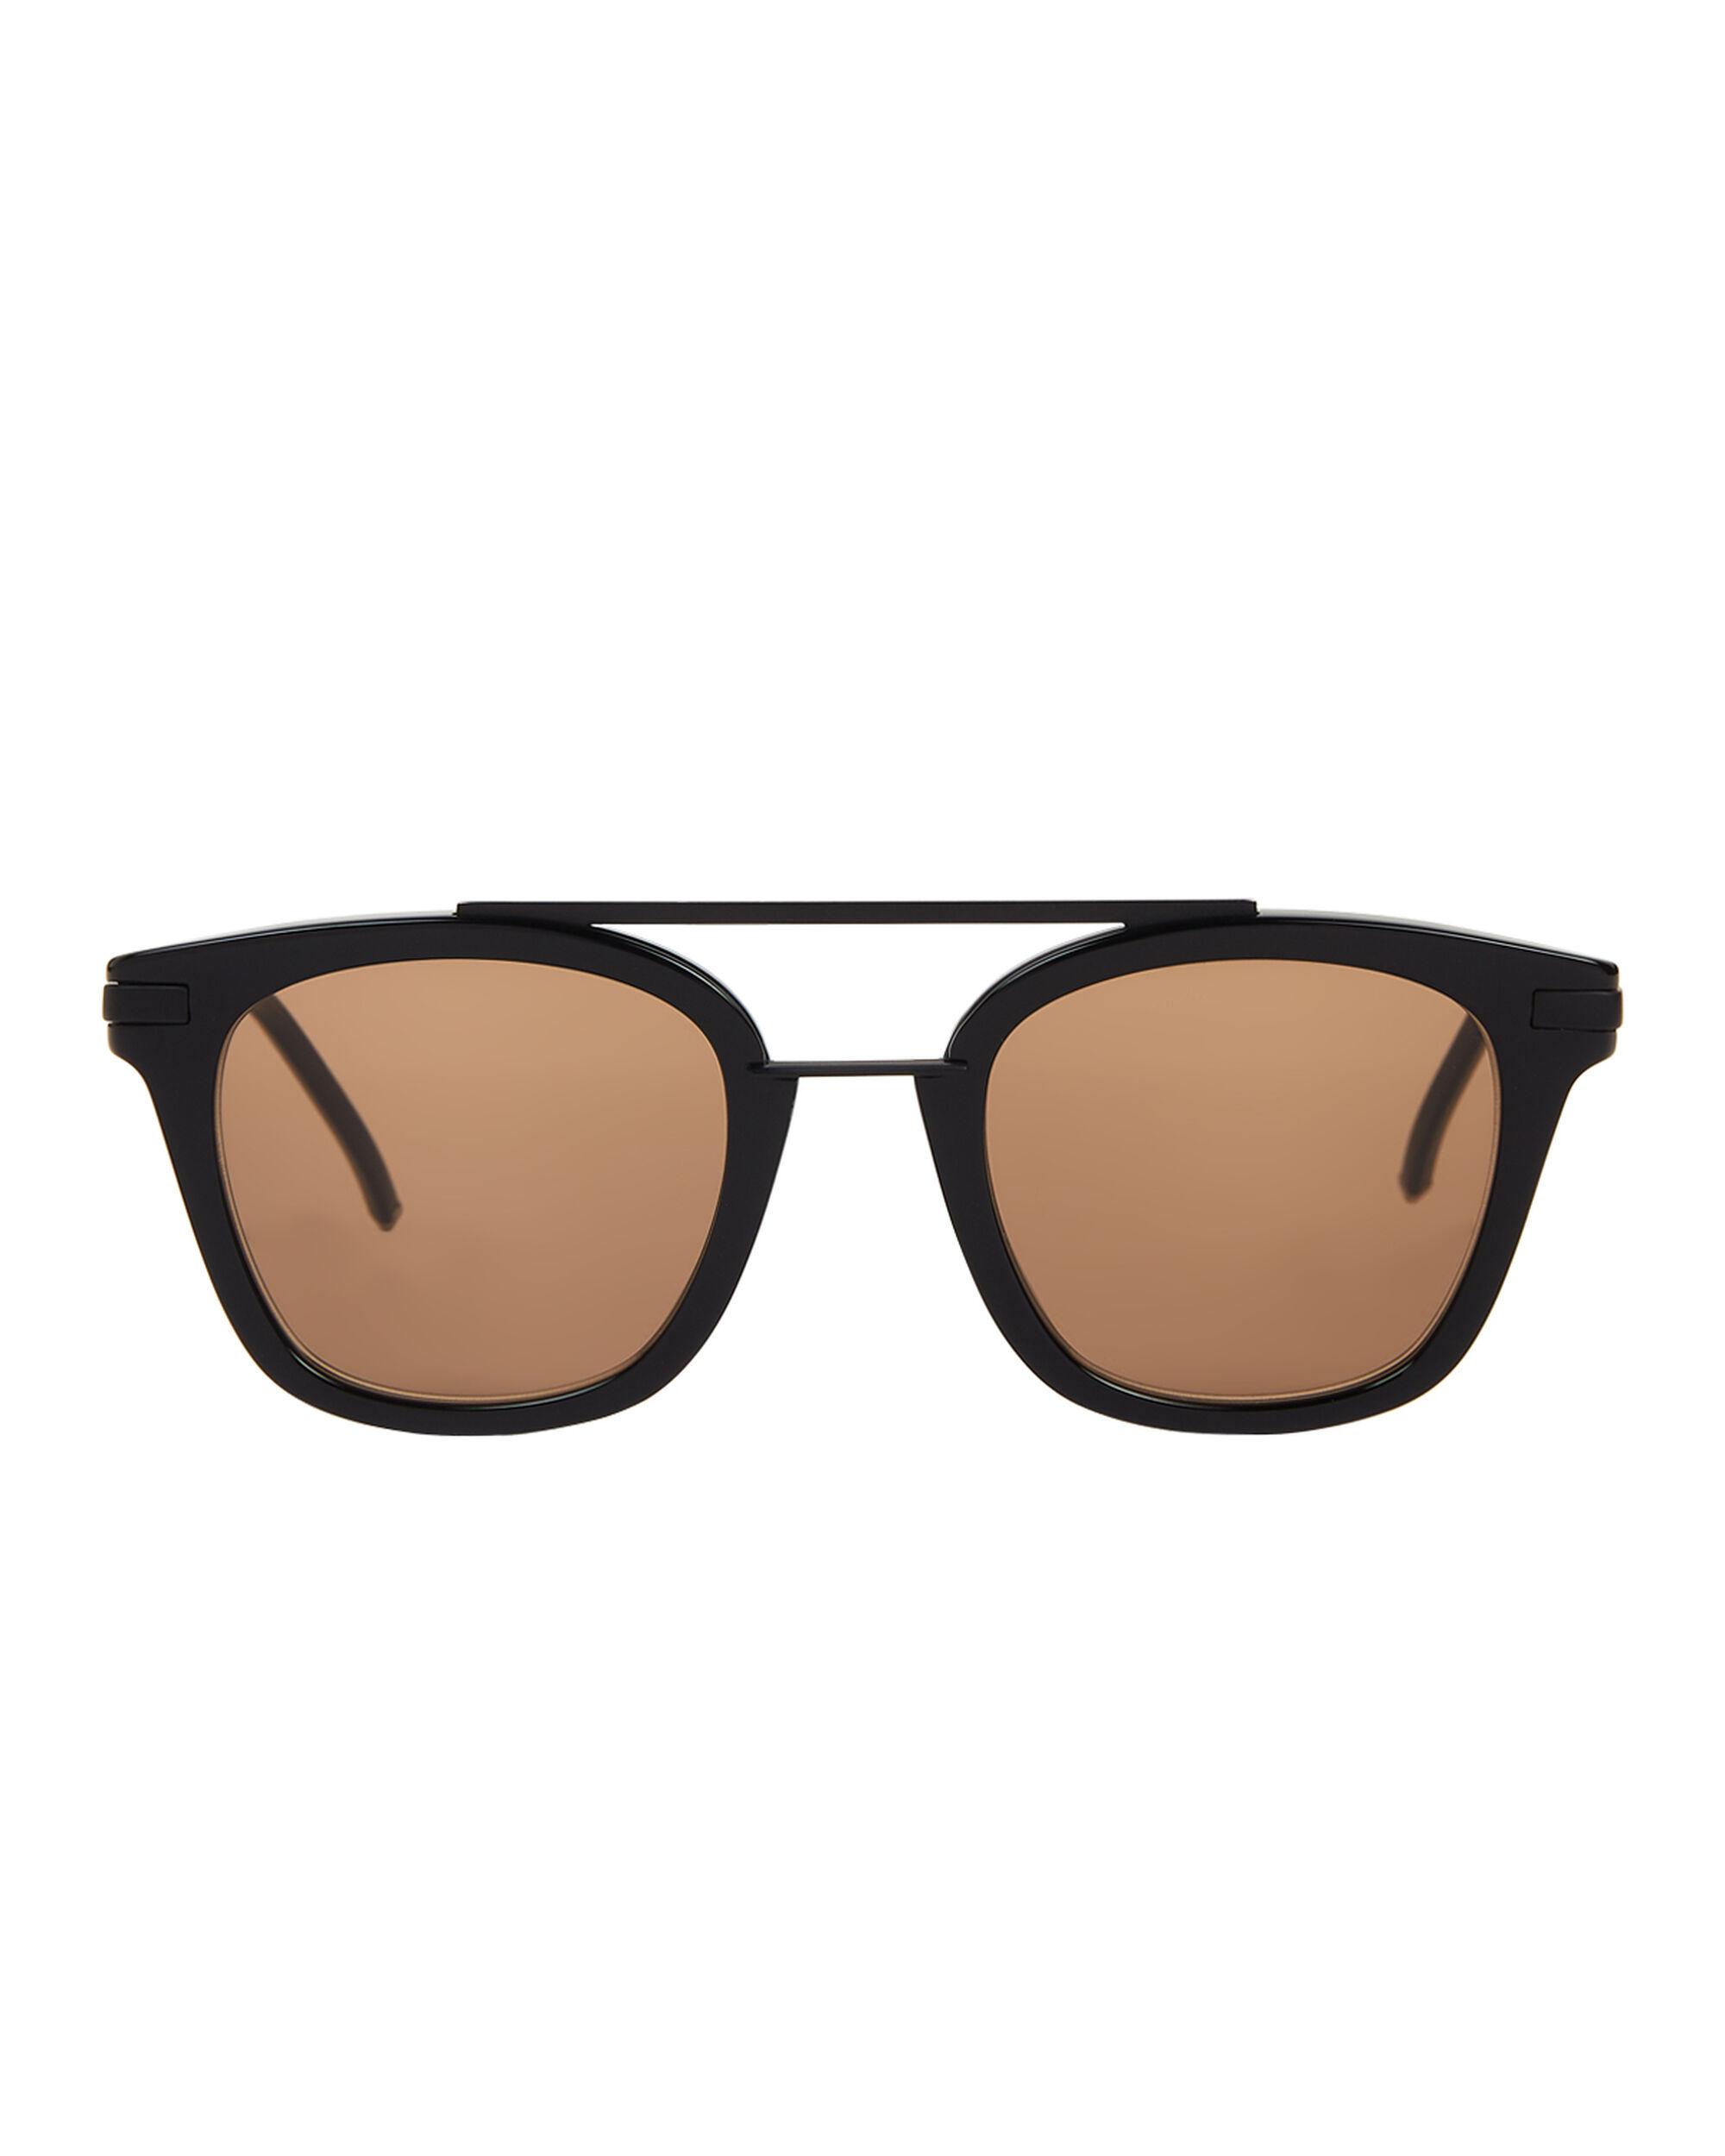 Fendi Ff 0224 Black & Blue Square Sunglasses for Men - Lyst